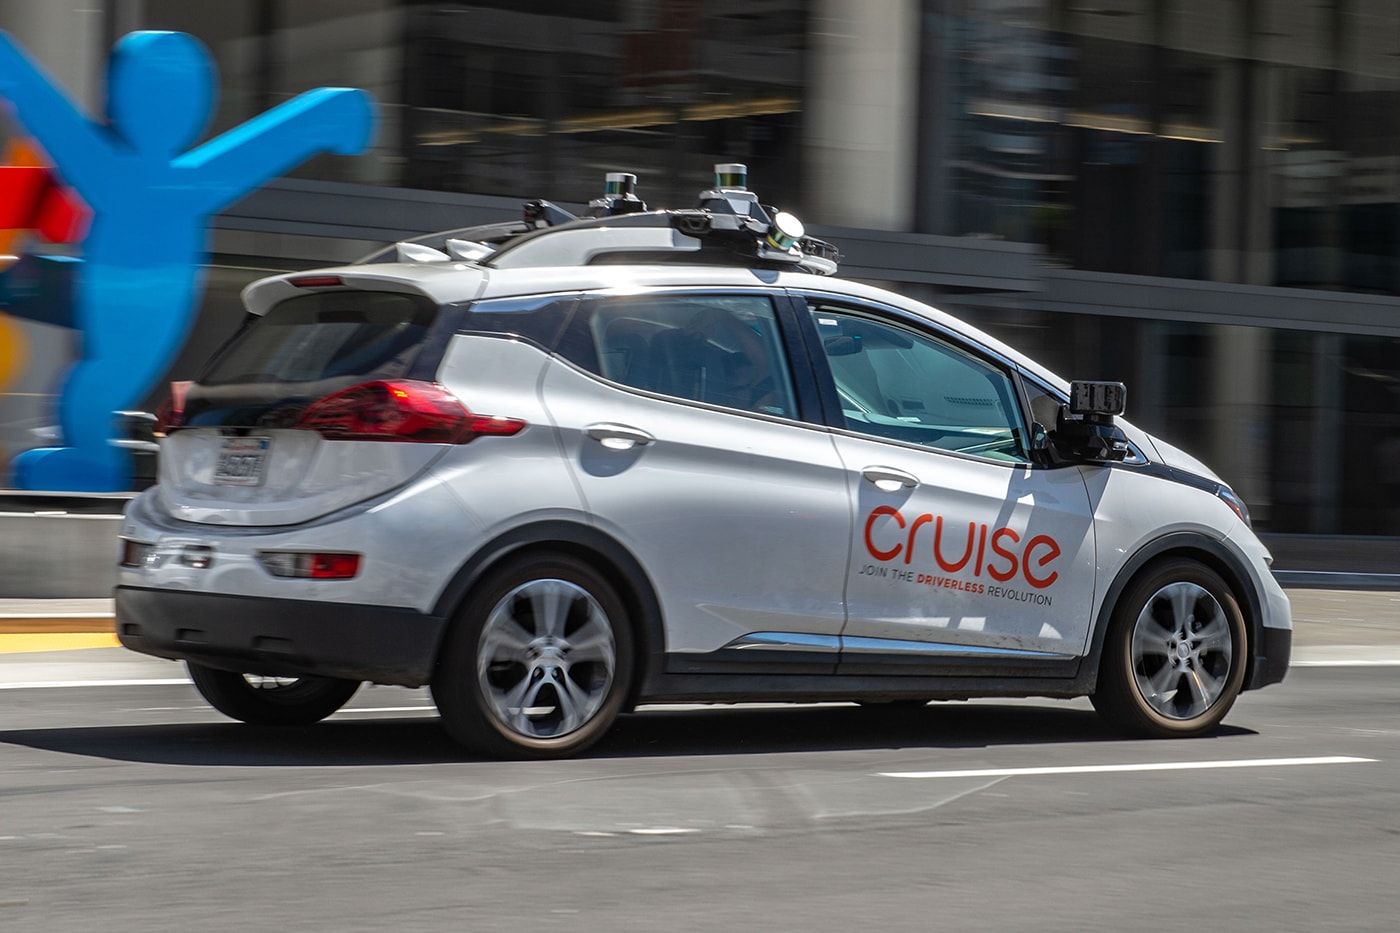 Microsoft Cruise GM self driving cars vehicles autonomous driving 2 billion usd self driving azure cloud based platform investment equity info